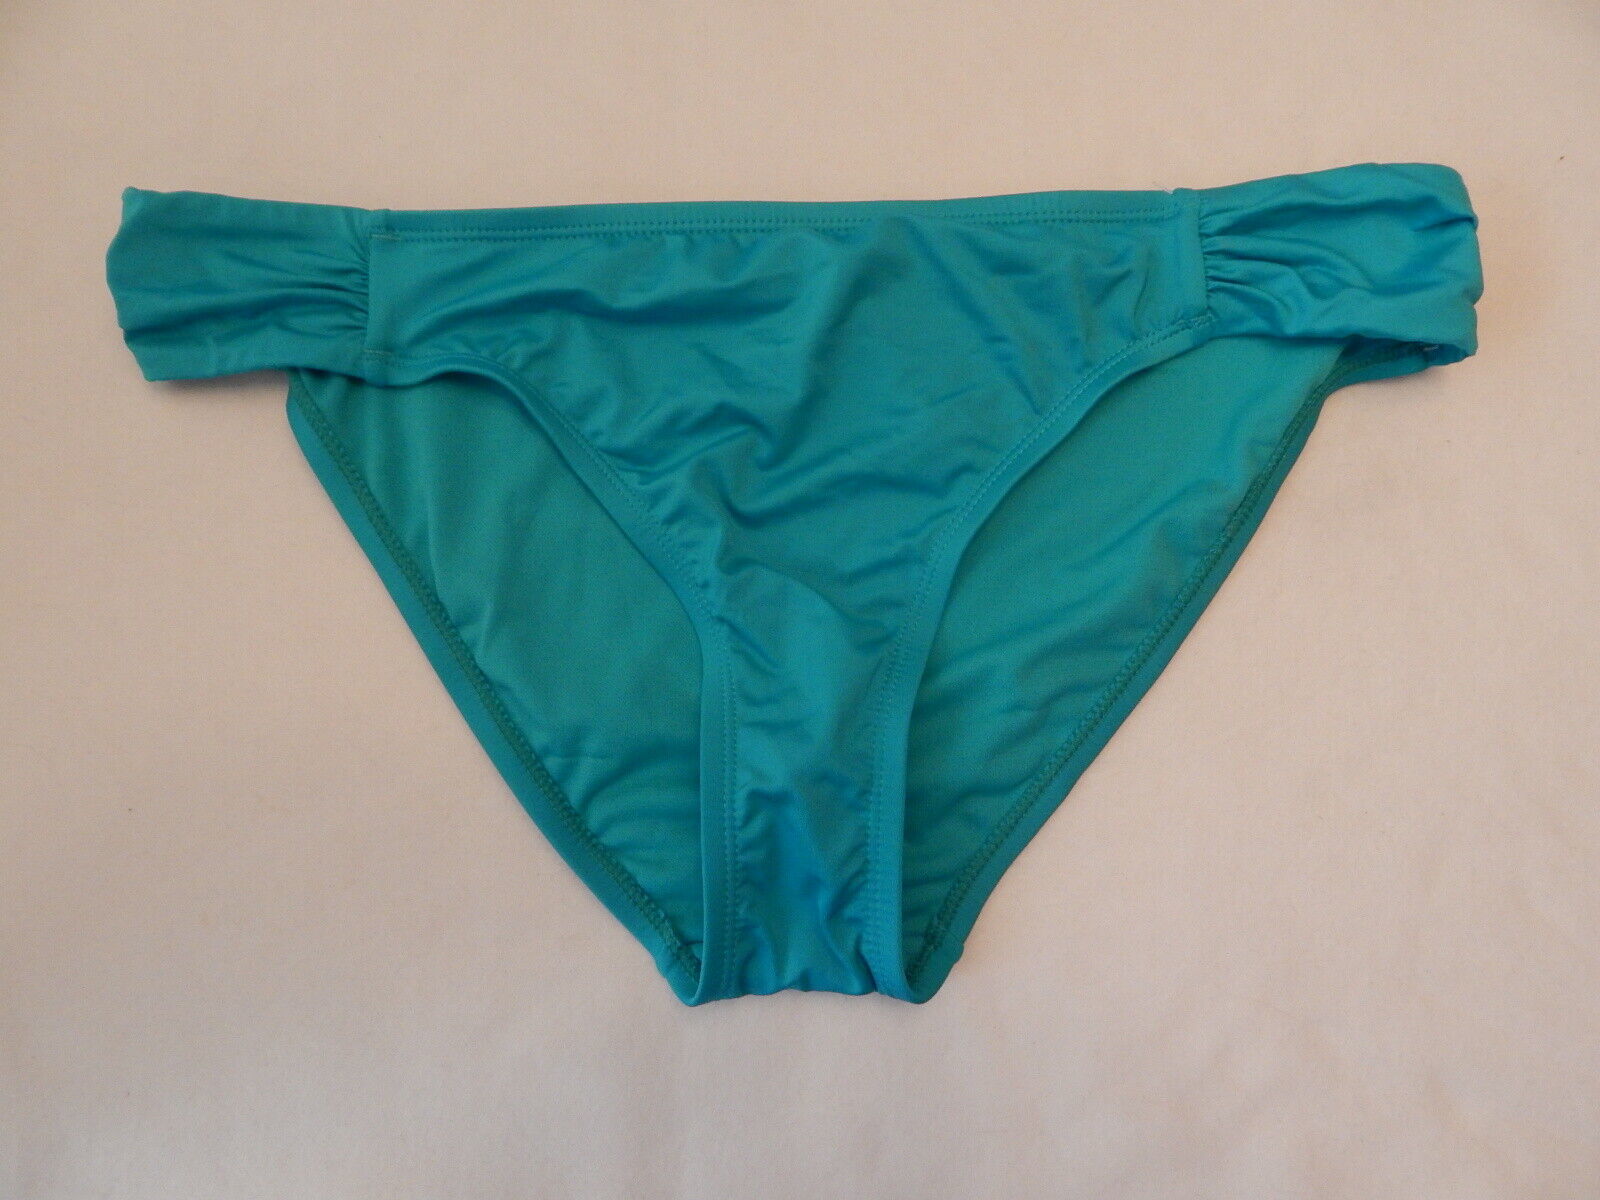 Primary image for NEW Liz Claiborne Swimsuit Bottom Mermaid Lagoon Size: 14 NWT Retail $48